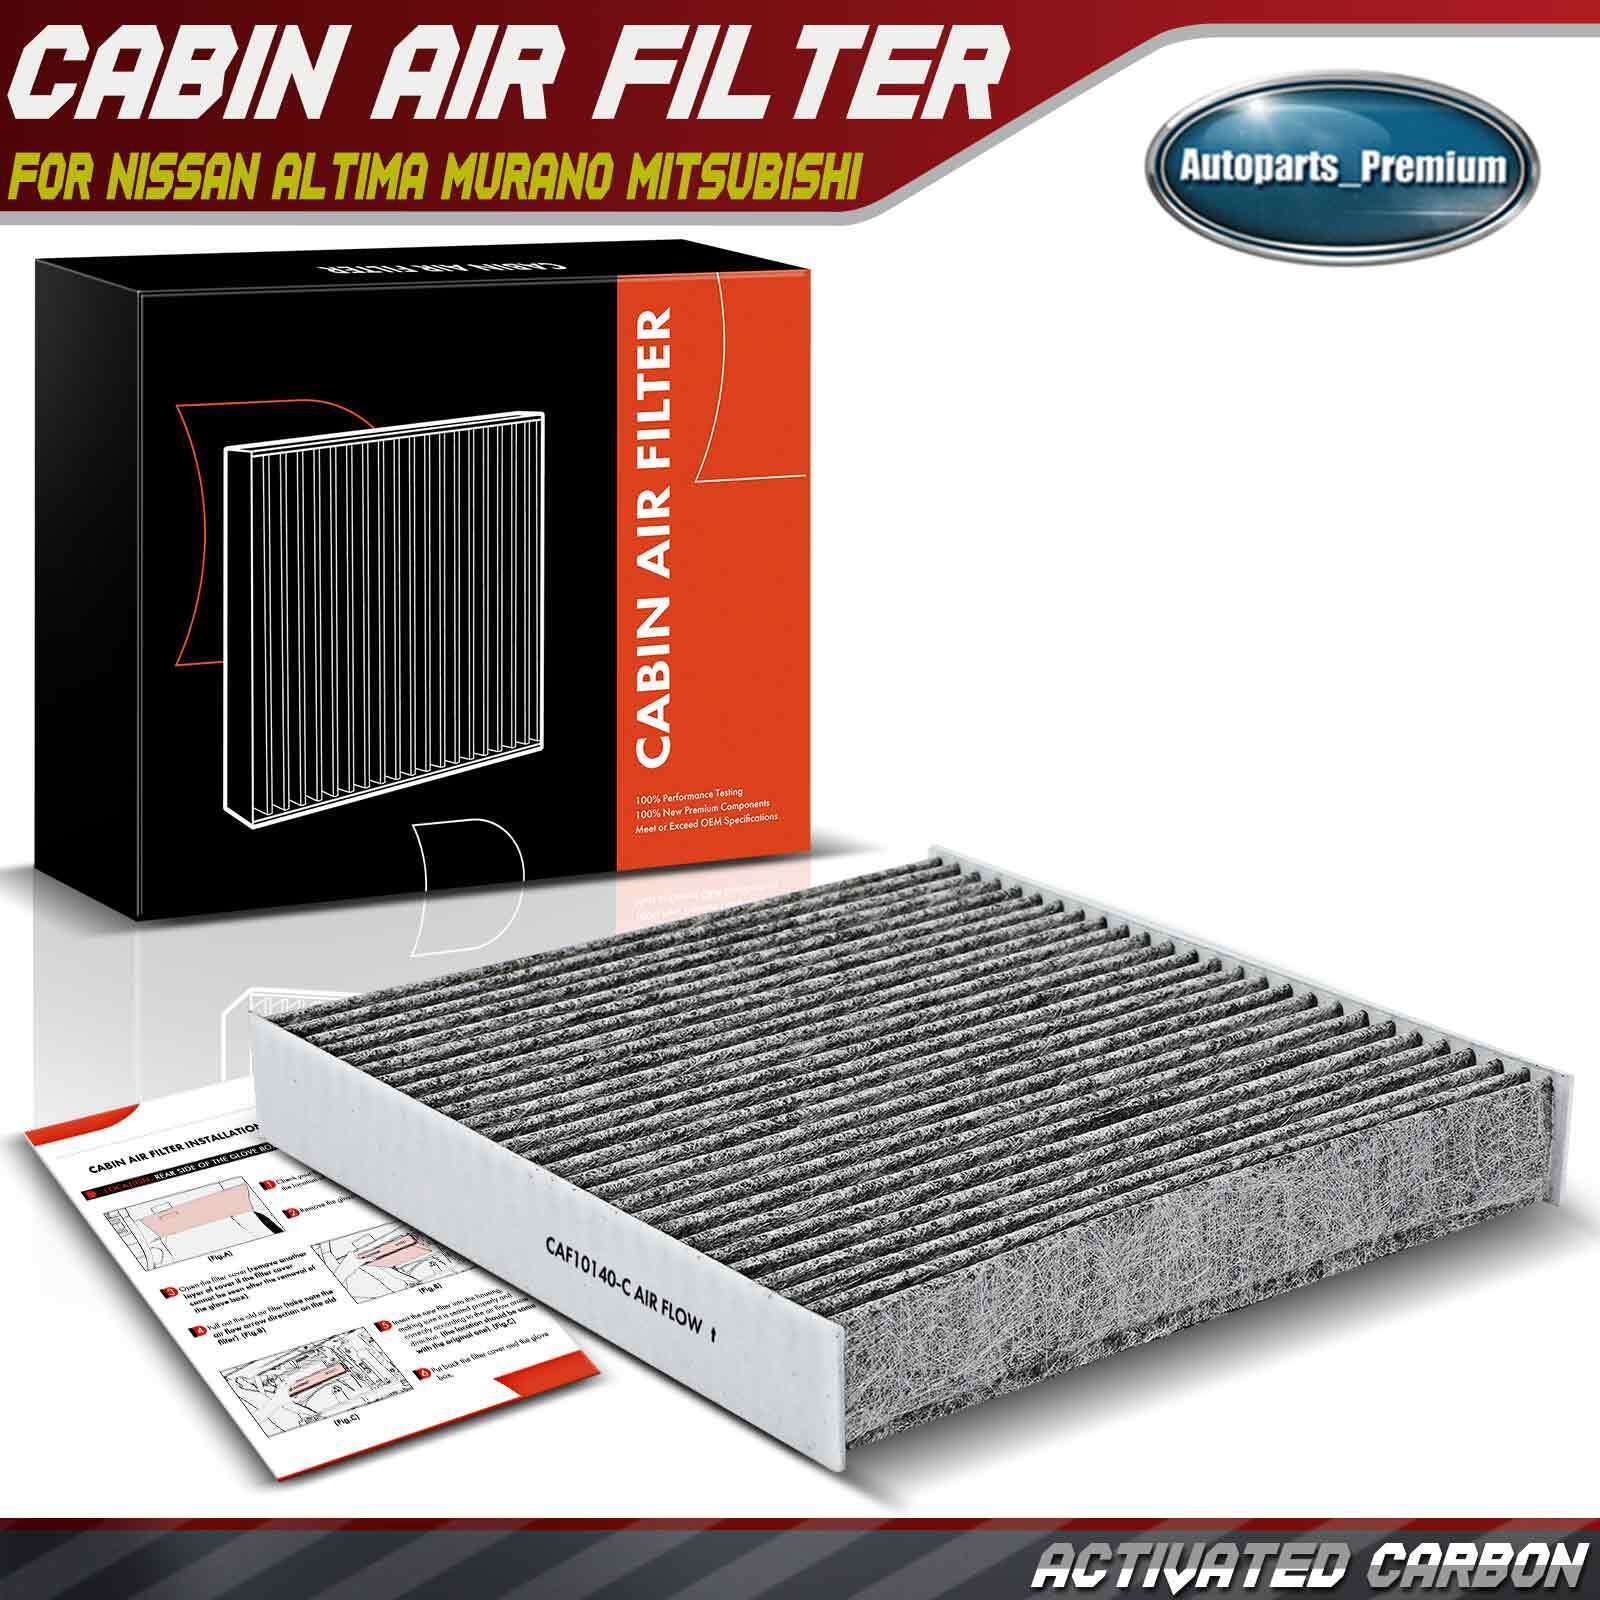 Activated Carbon Cabin Air Filter for Nissan Maxima Sentra Murano Mitsubishi 